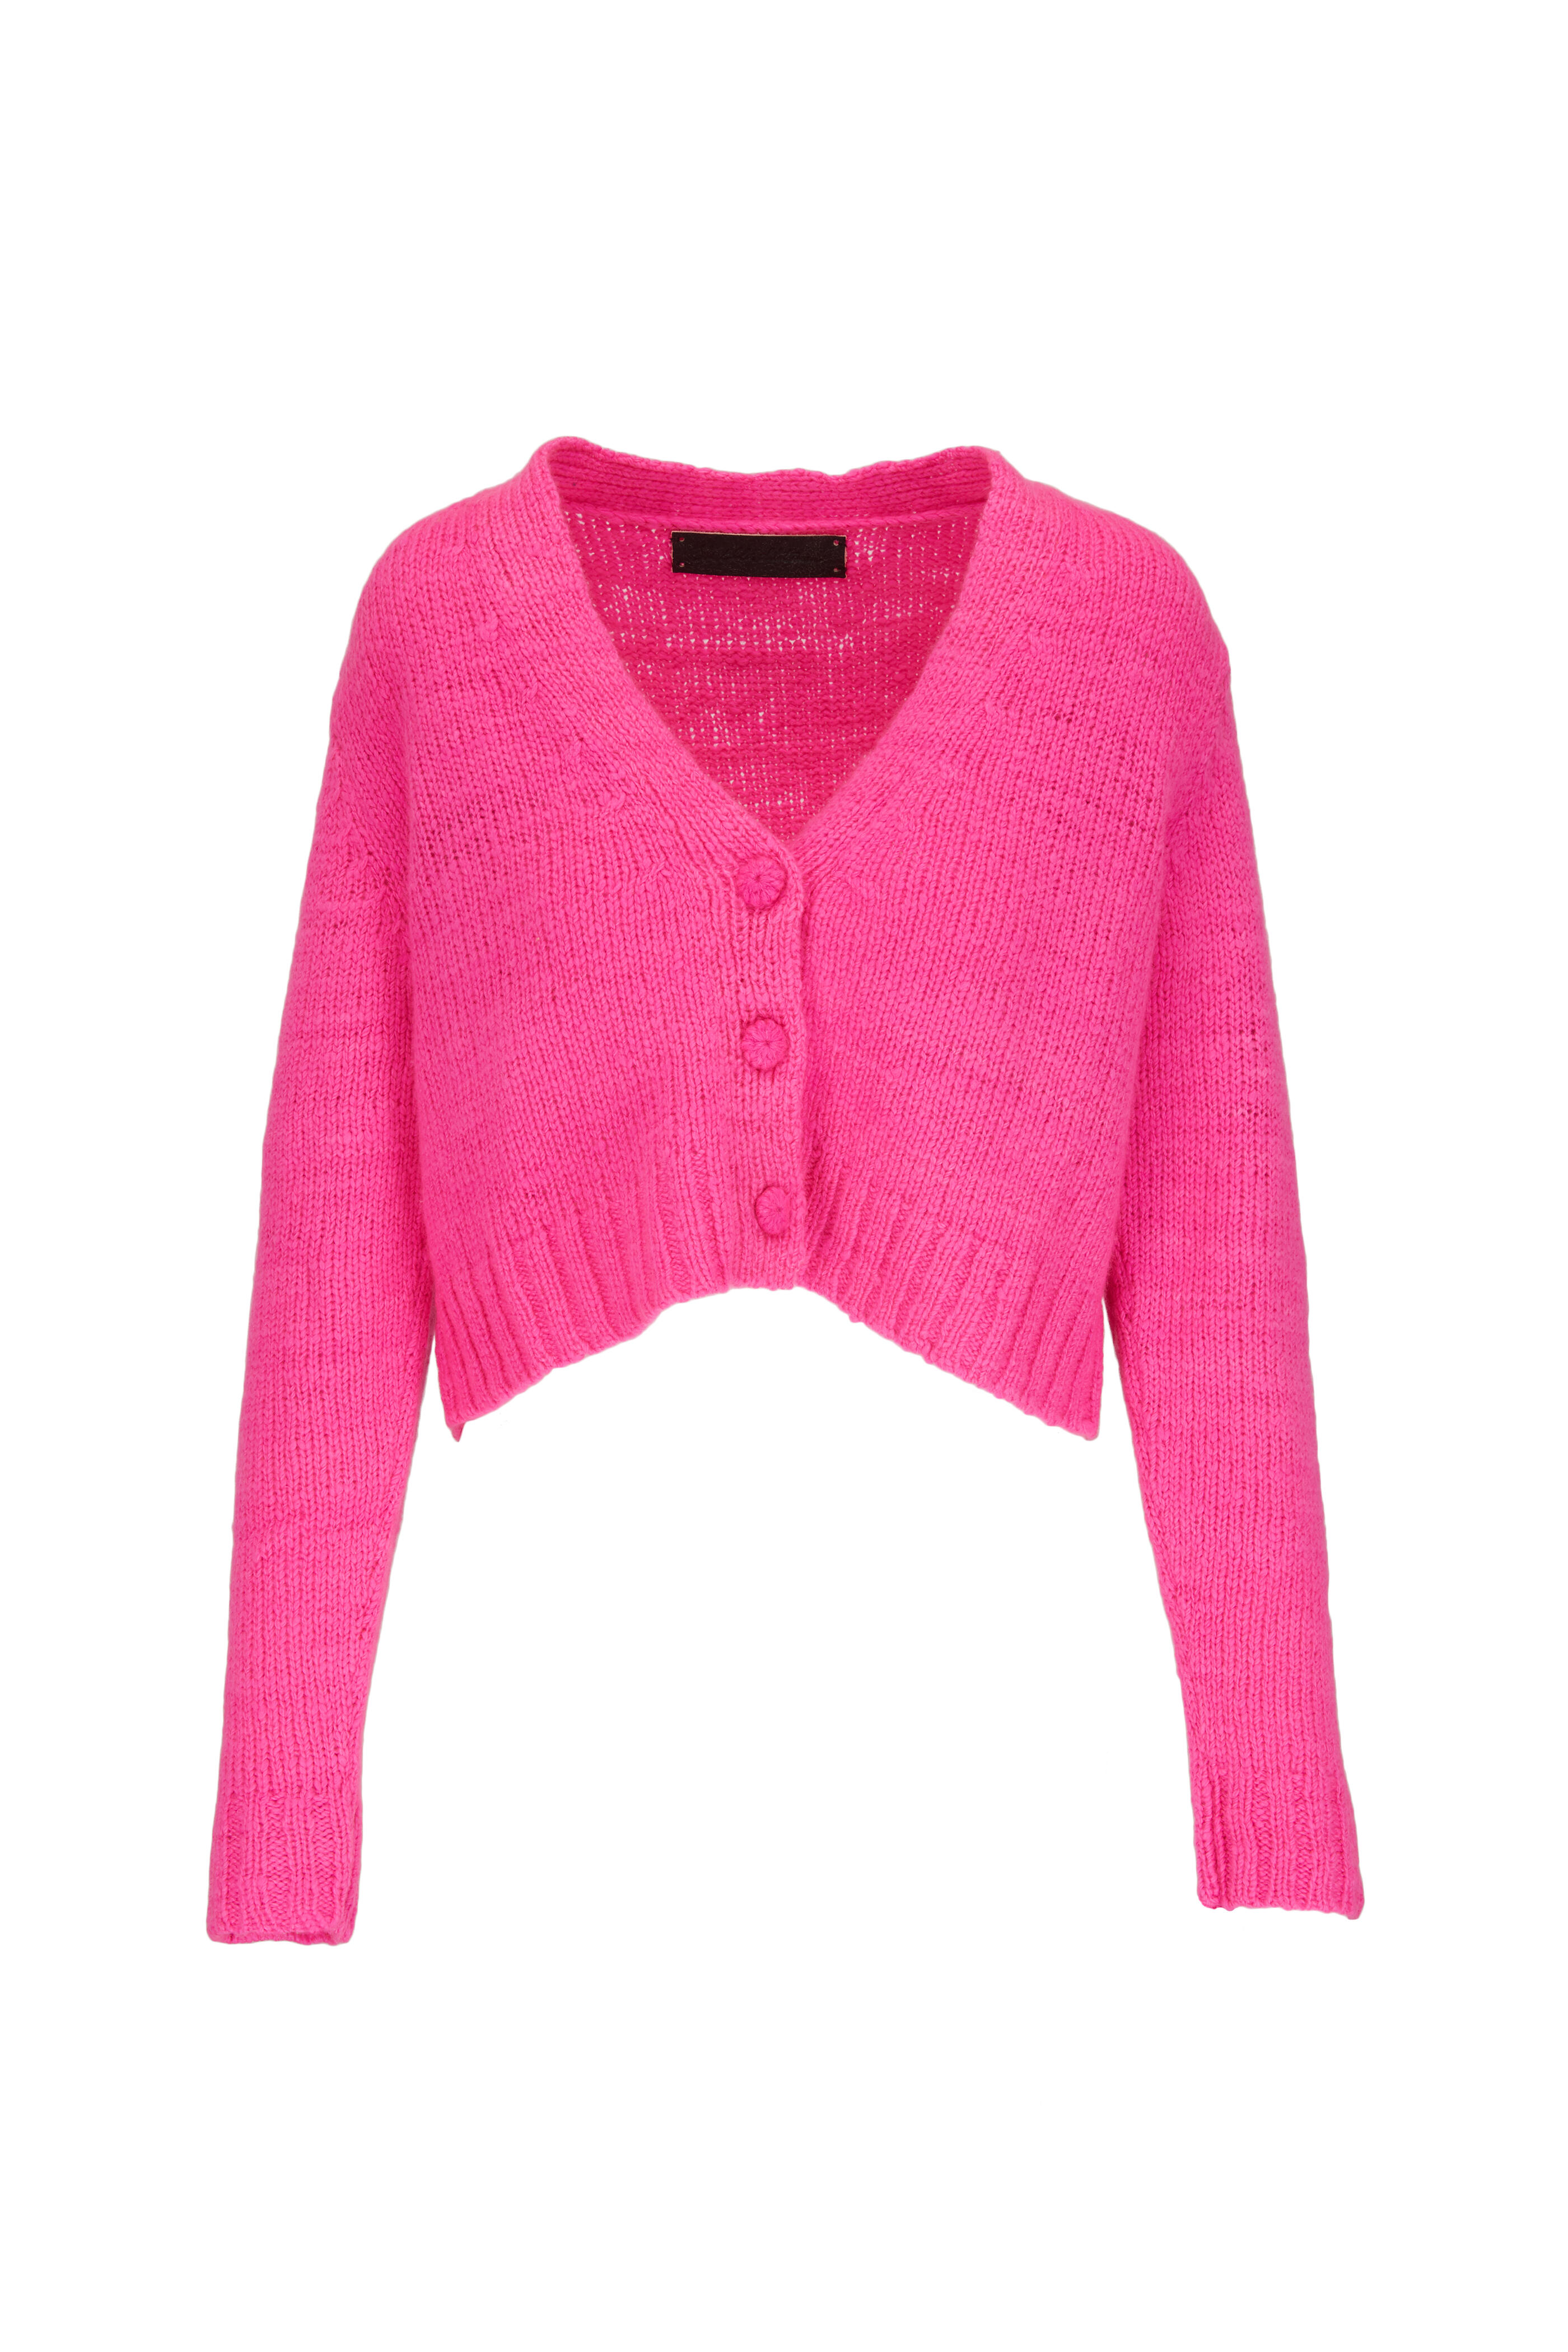 The Elder Statesman - Hot Pink Cashmere Knit Cropped Cardigan